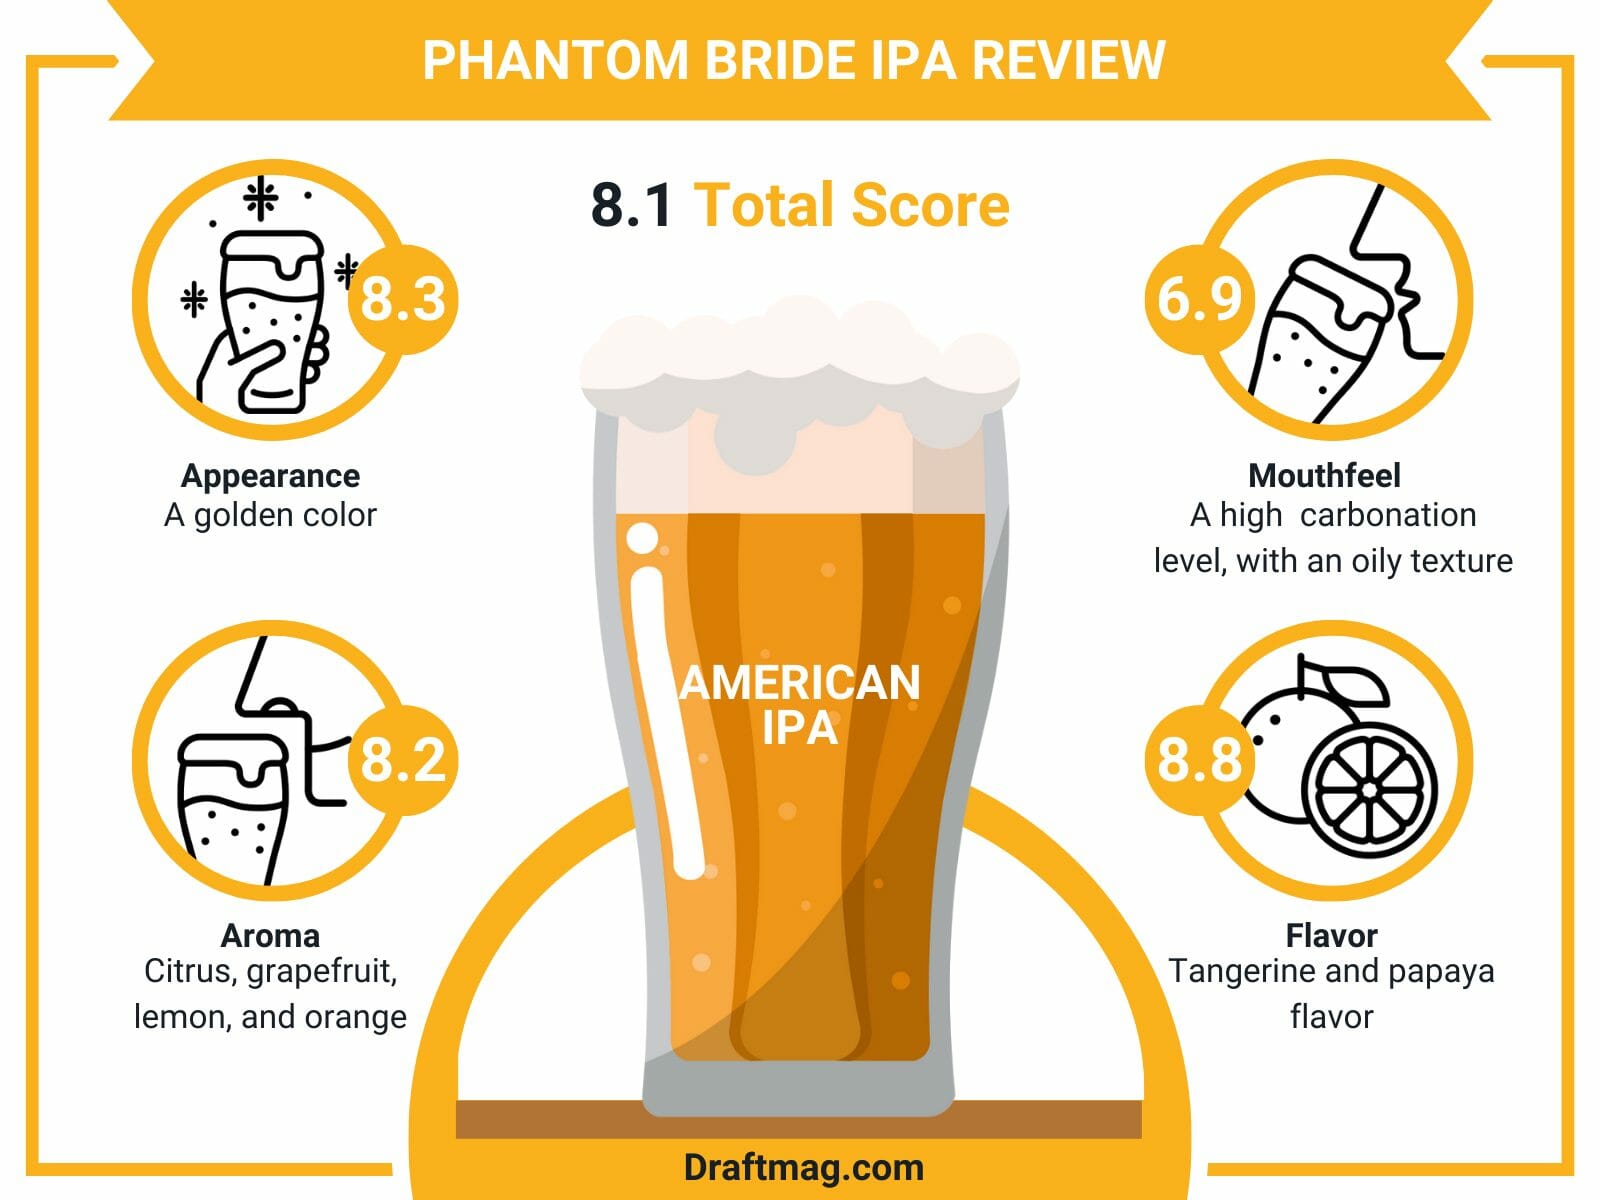 Phantom bride ipa review infographic